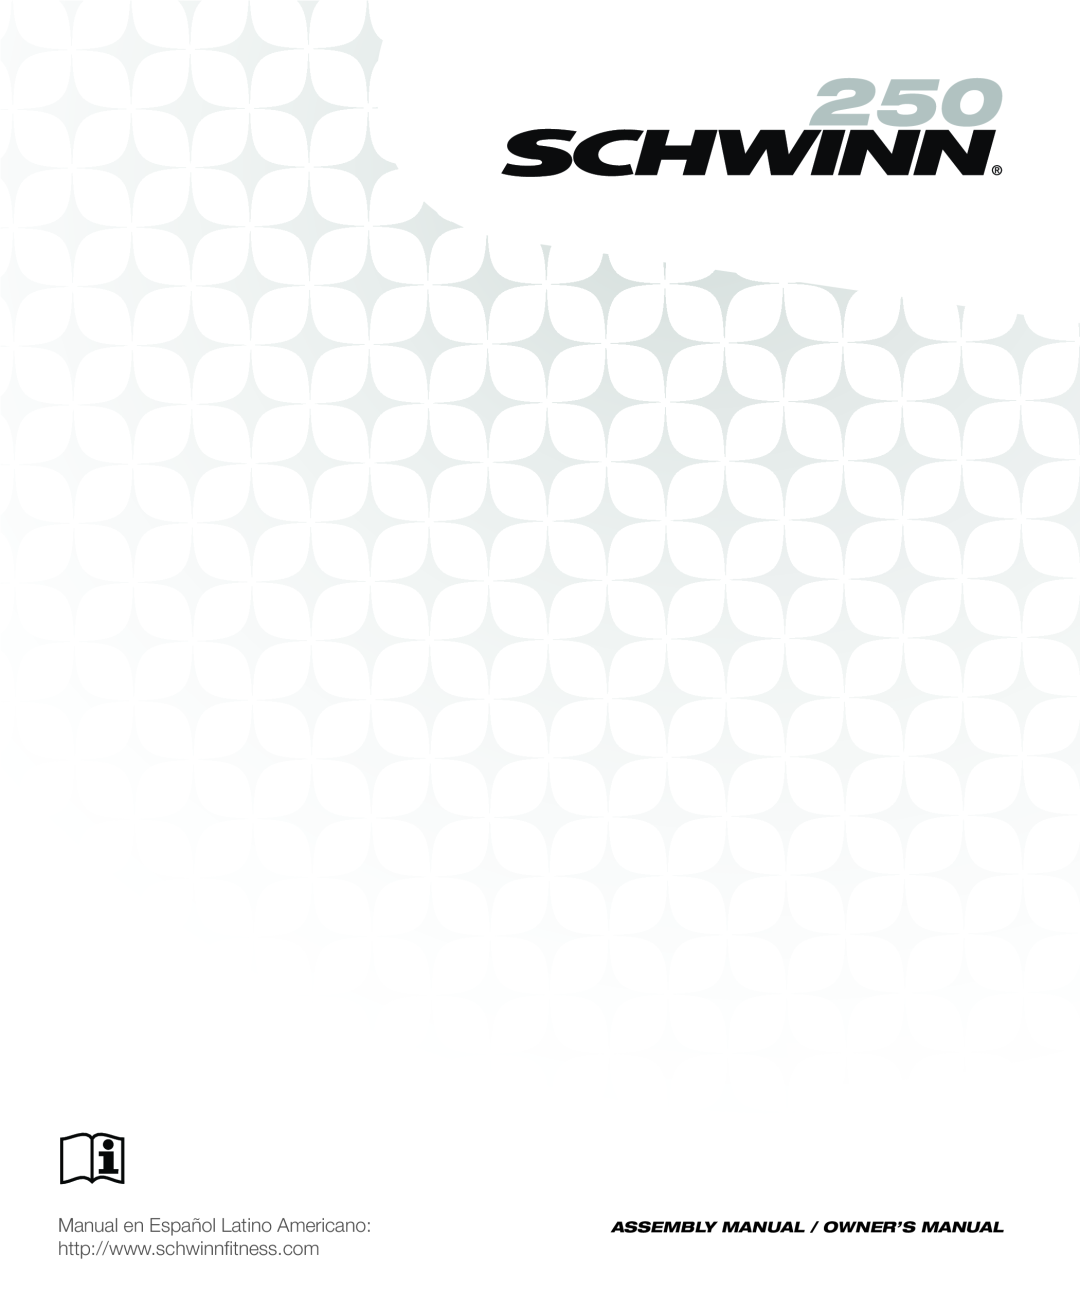 Schwinn 250 schwinn manual Assembly Manual / Owner’S Manual 